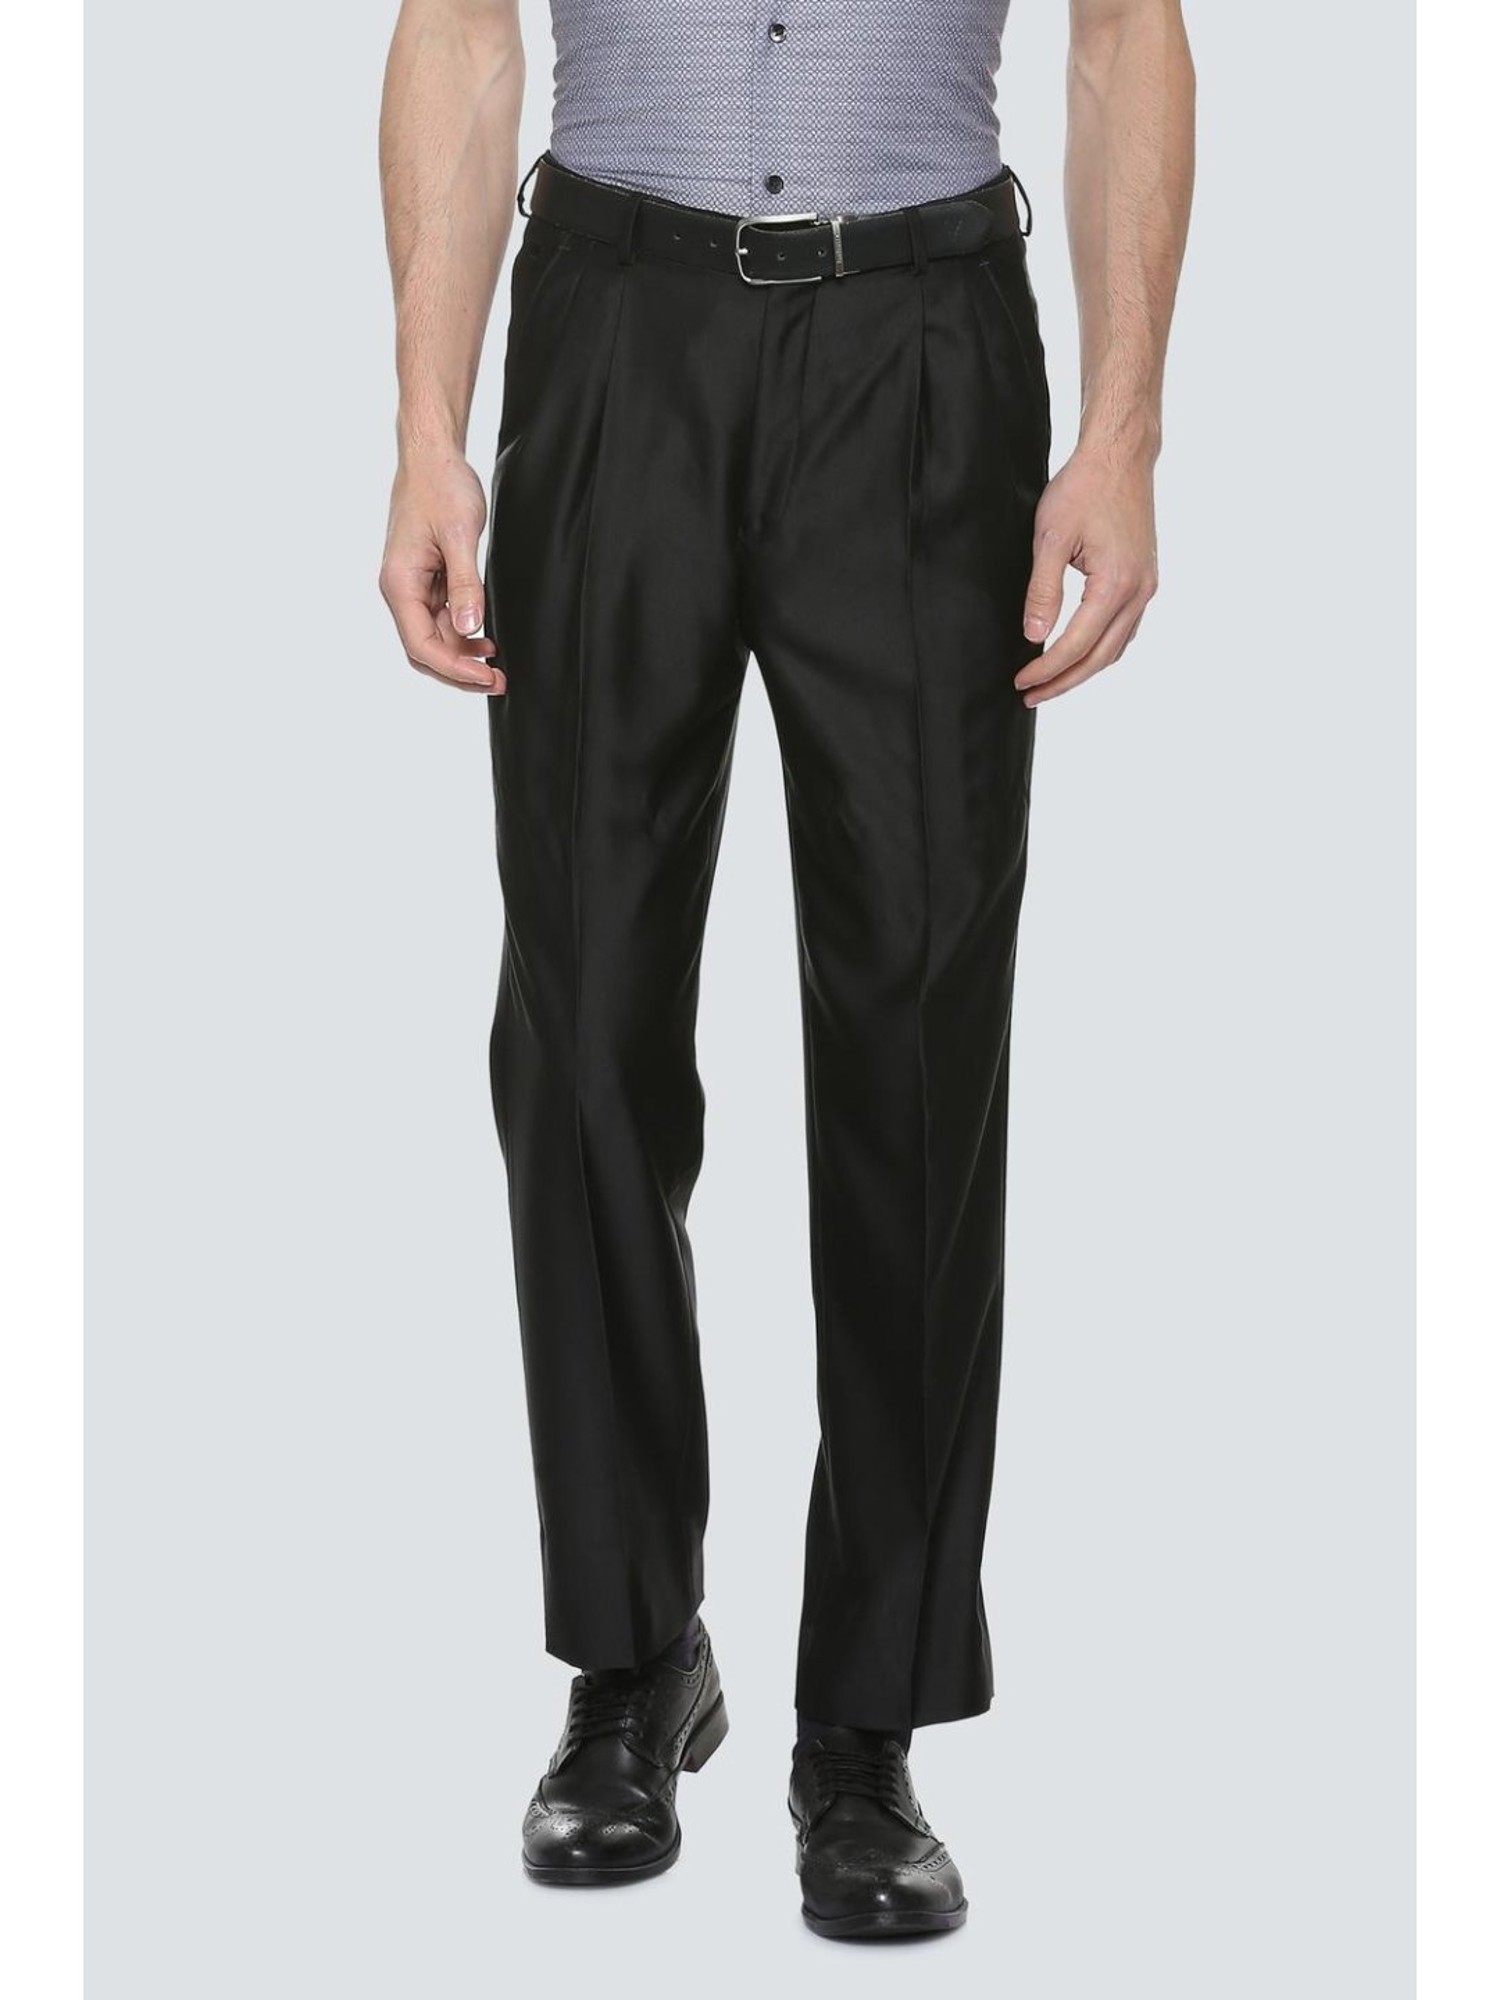 Buy Black Trousers  Pants for Men by SN by Shantnu Nikhil Online   Ajiocom